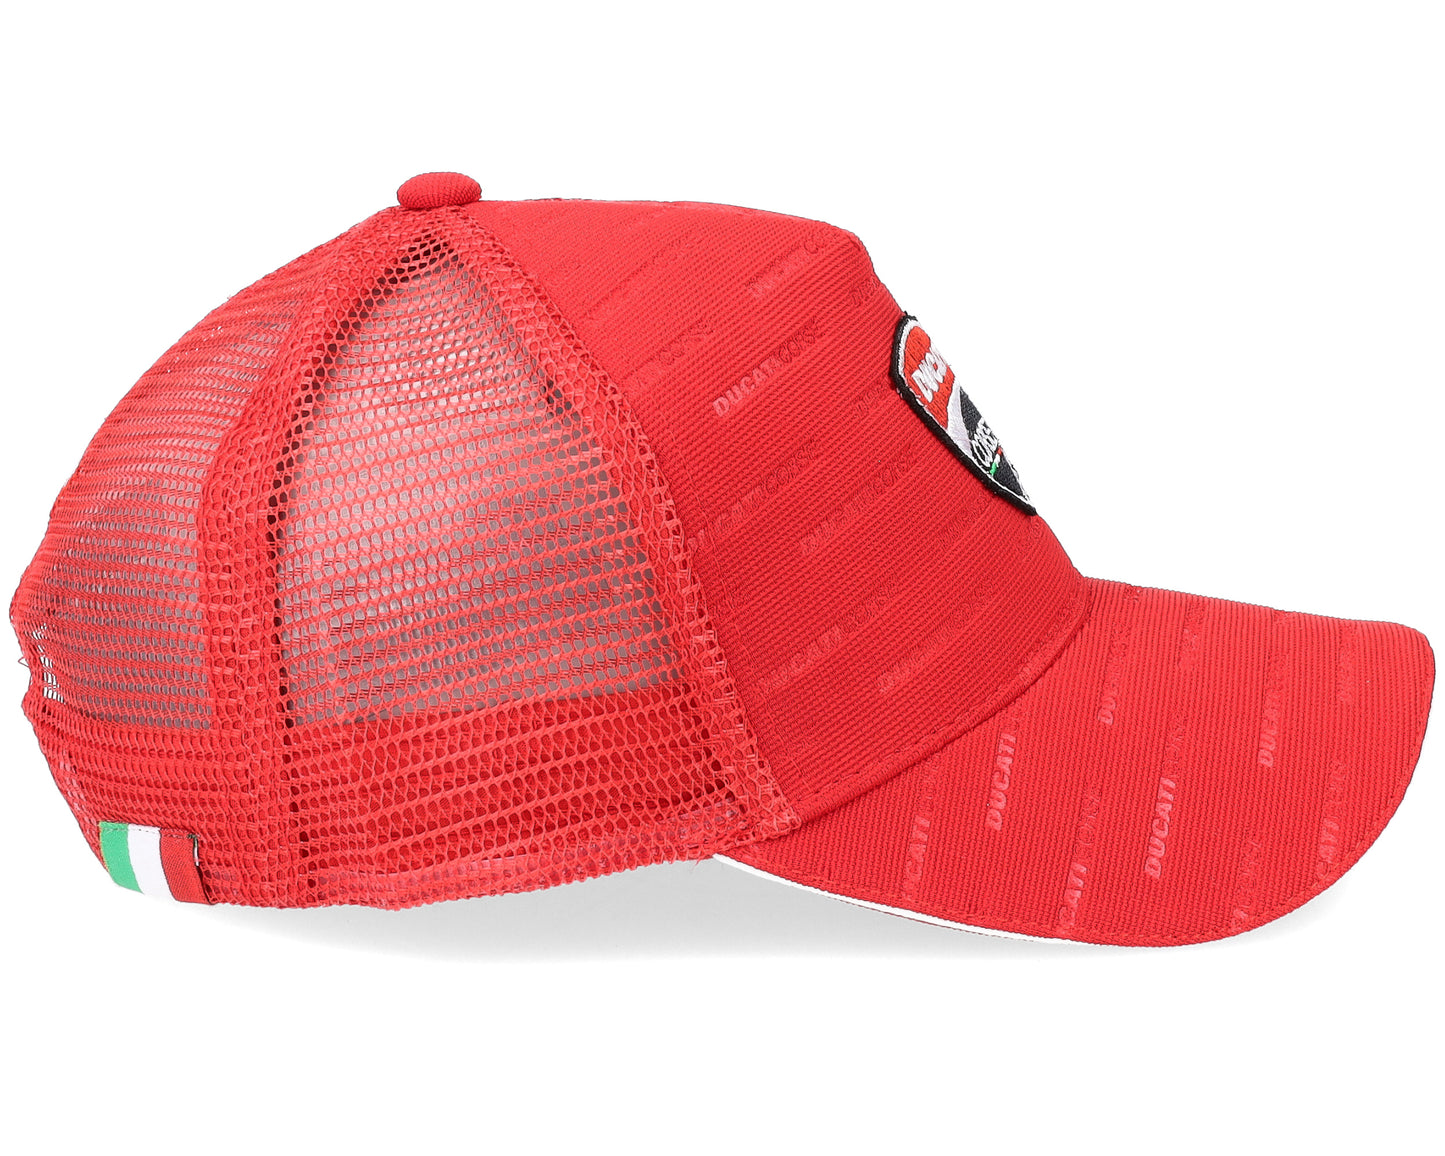 DUCATI CORSE TEAM - KID'S - RED TRUCKER HAT